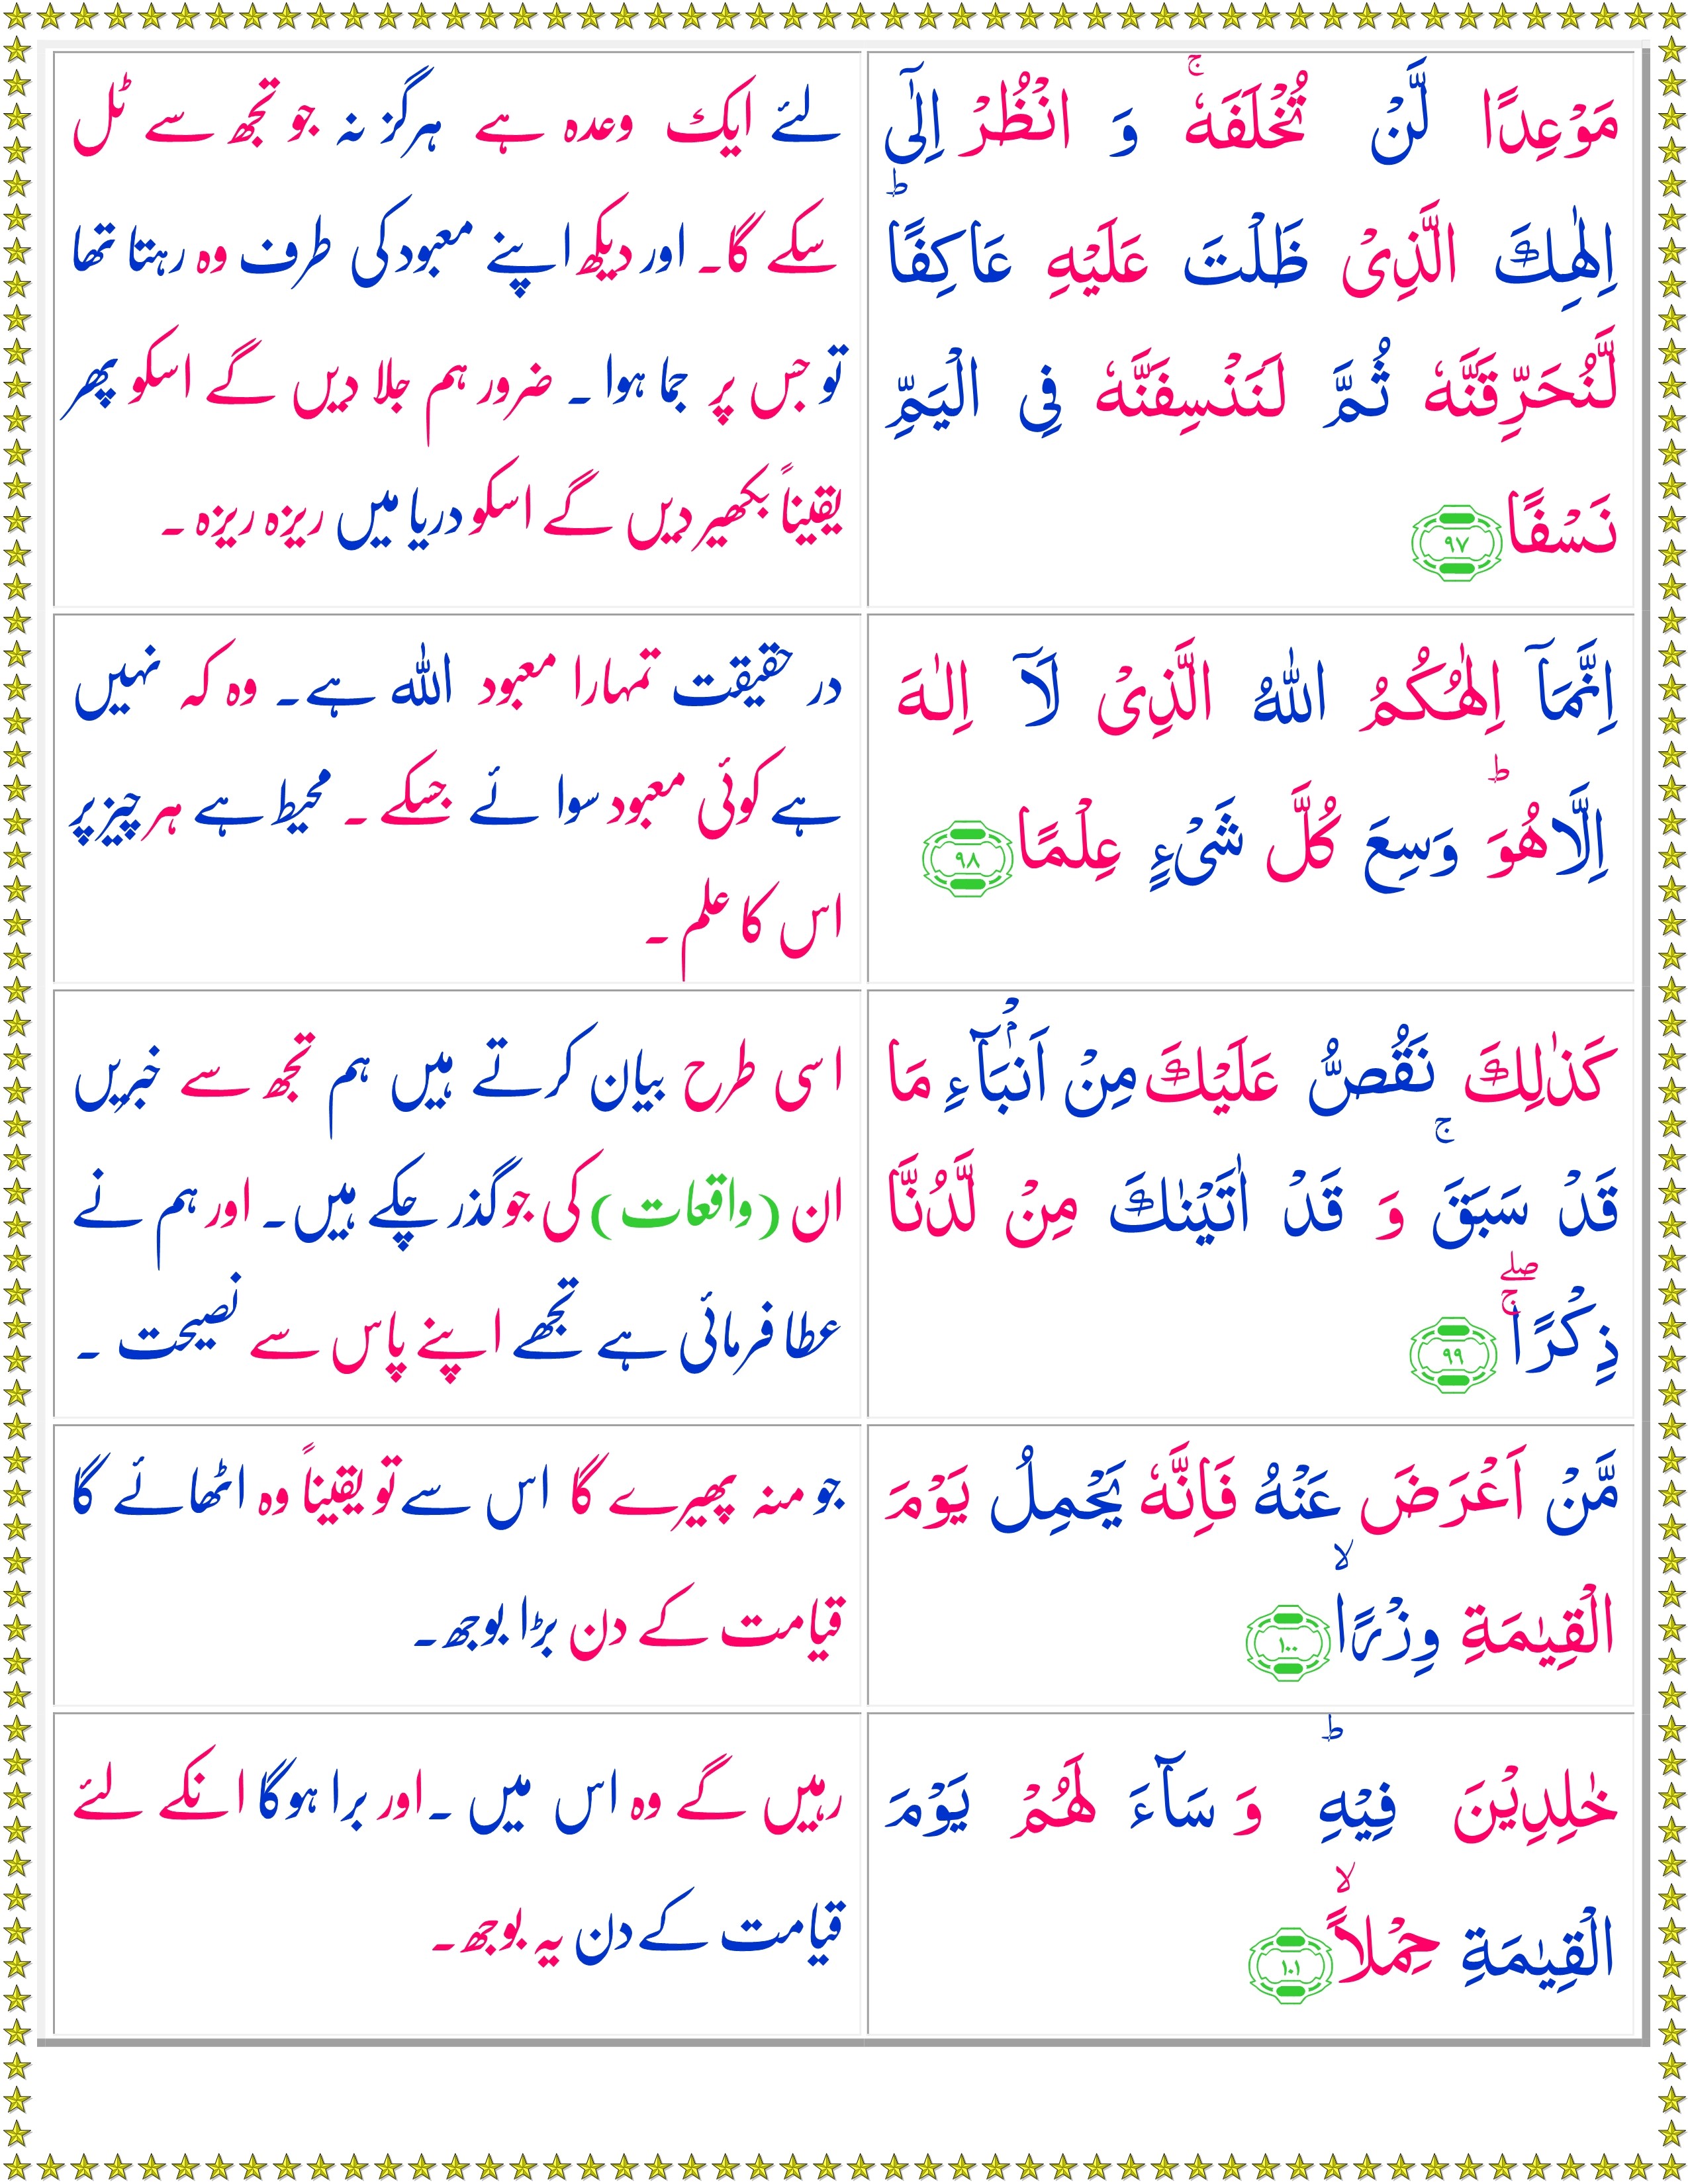 Surah Taha Urdu Page 2 Of 3 Quran O Sunnat